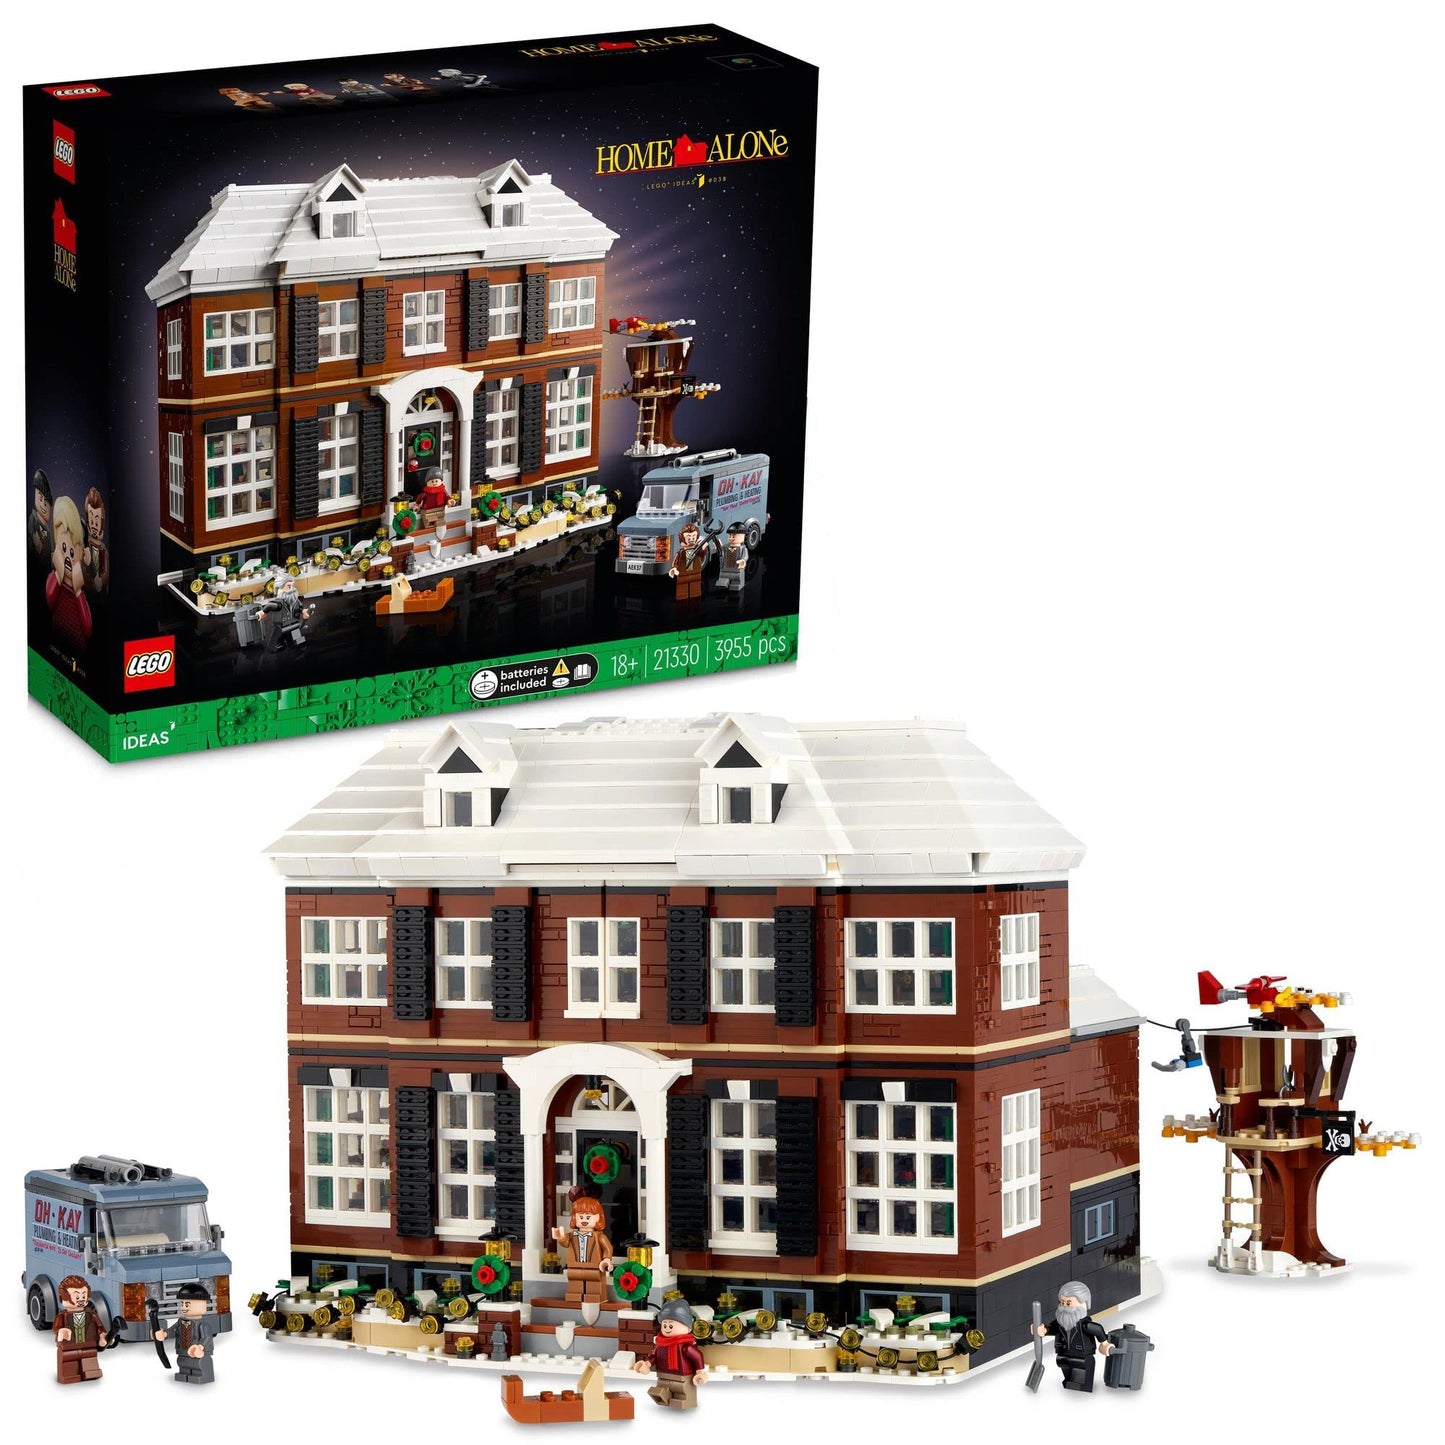 LEGO Ideas Home Alone McCallisters’ House 21330